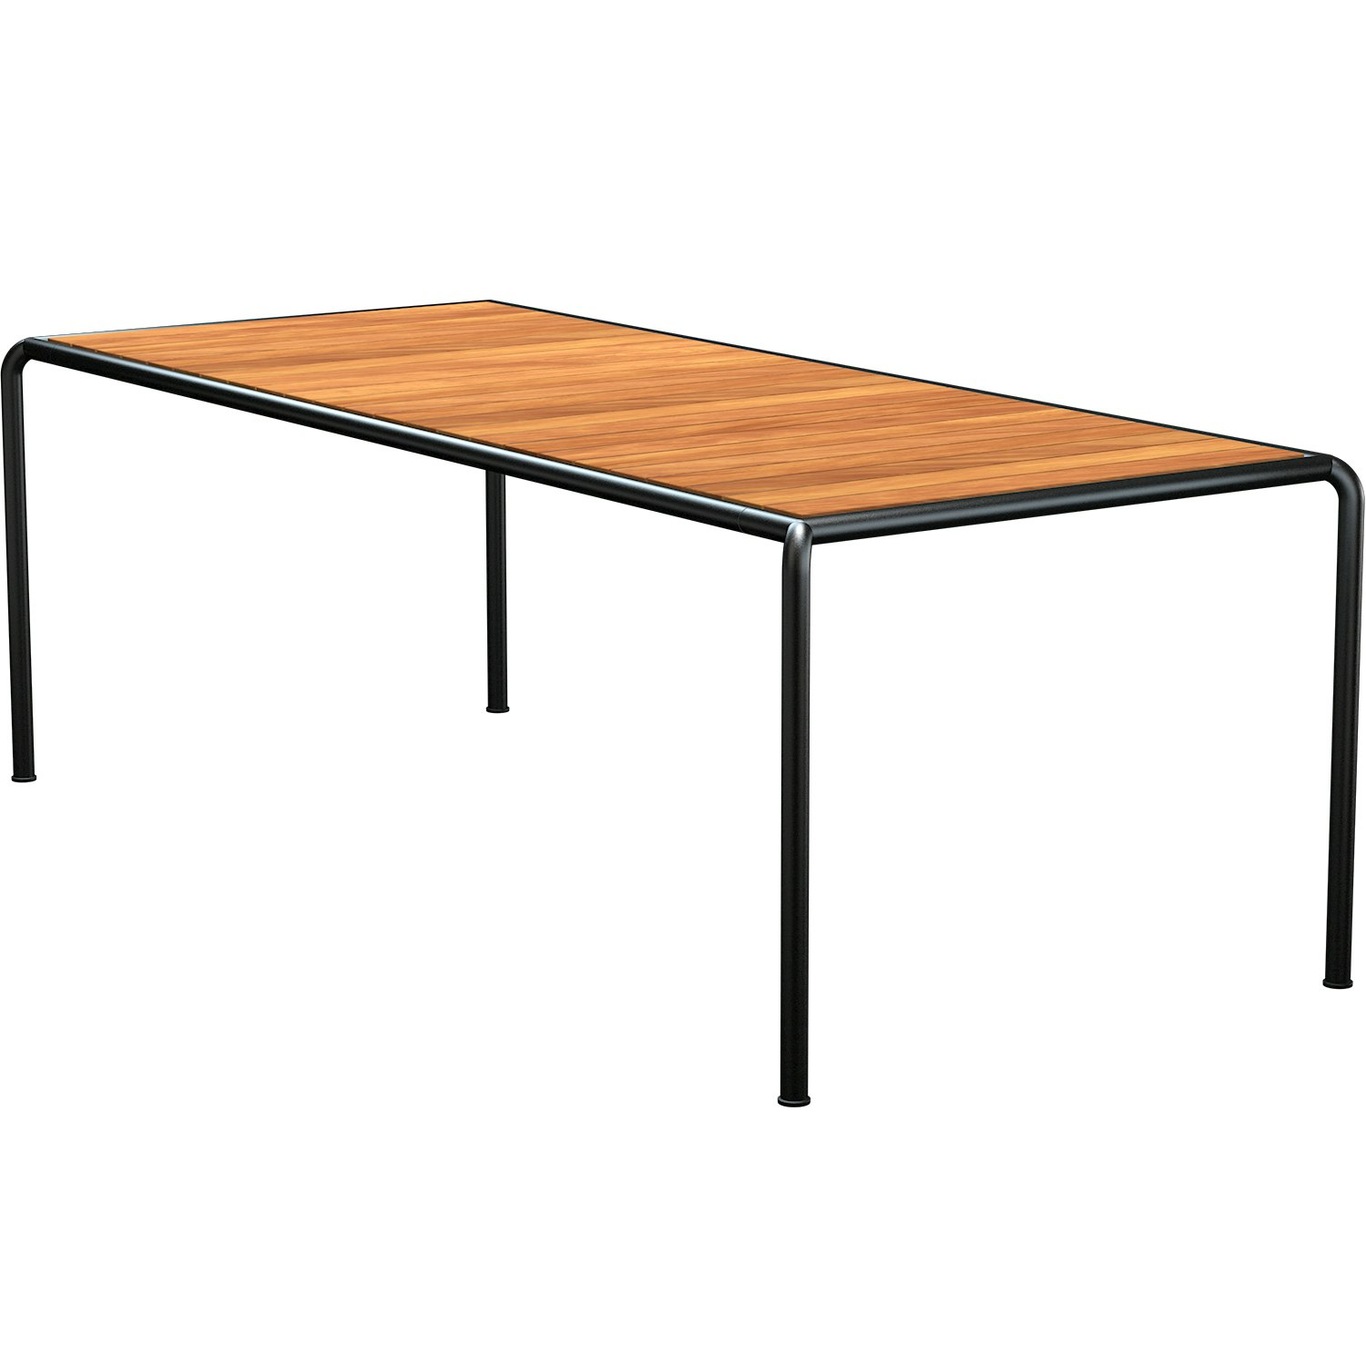 Avanti Dining Table 98x222 cm, Thermotreated Ash